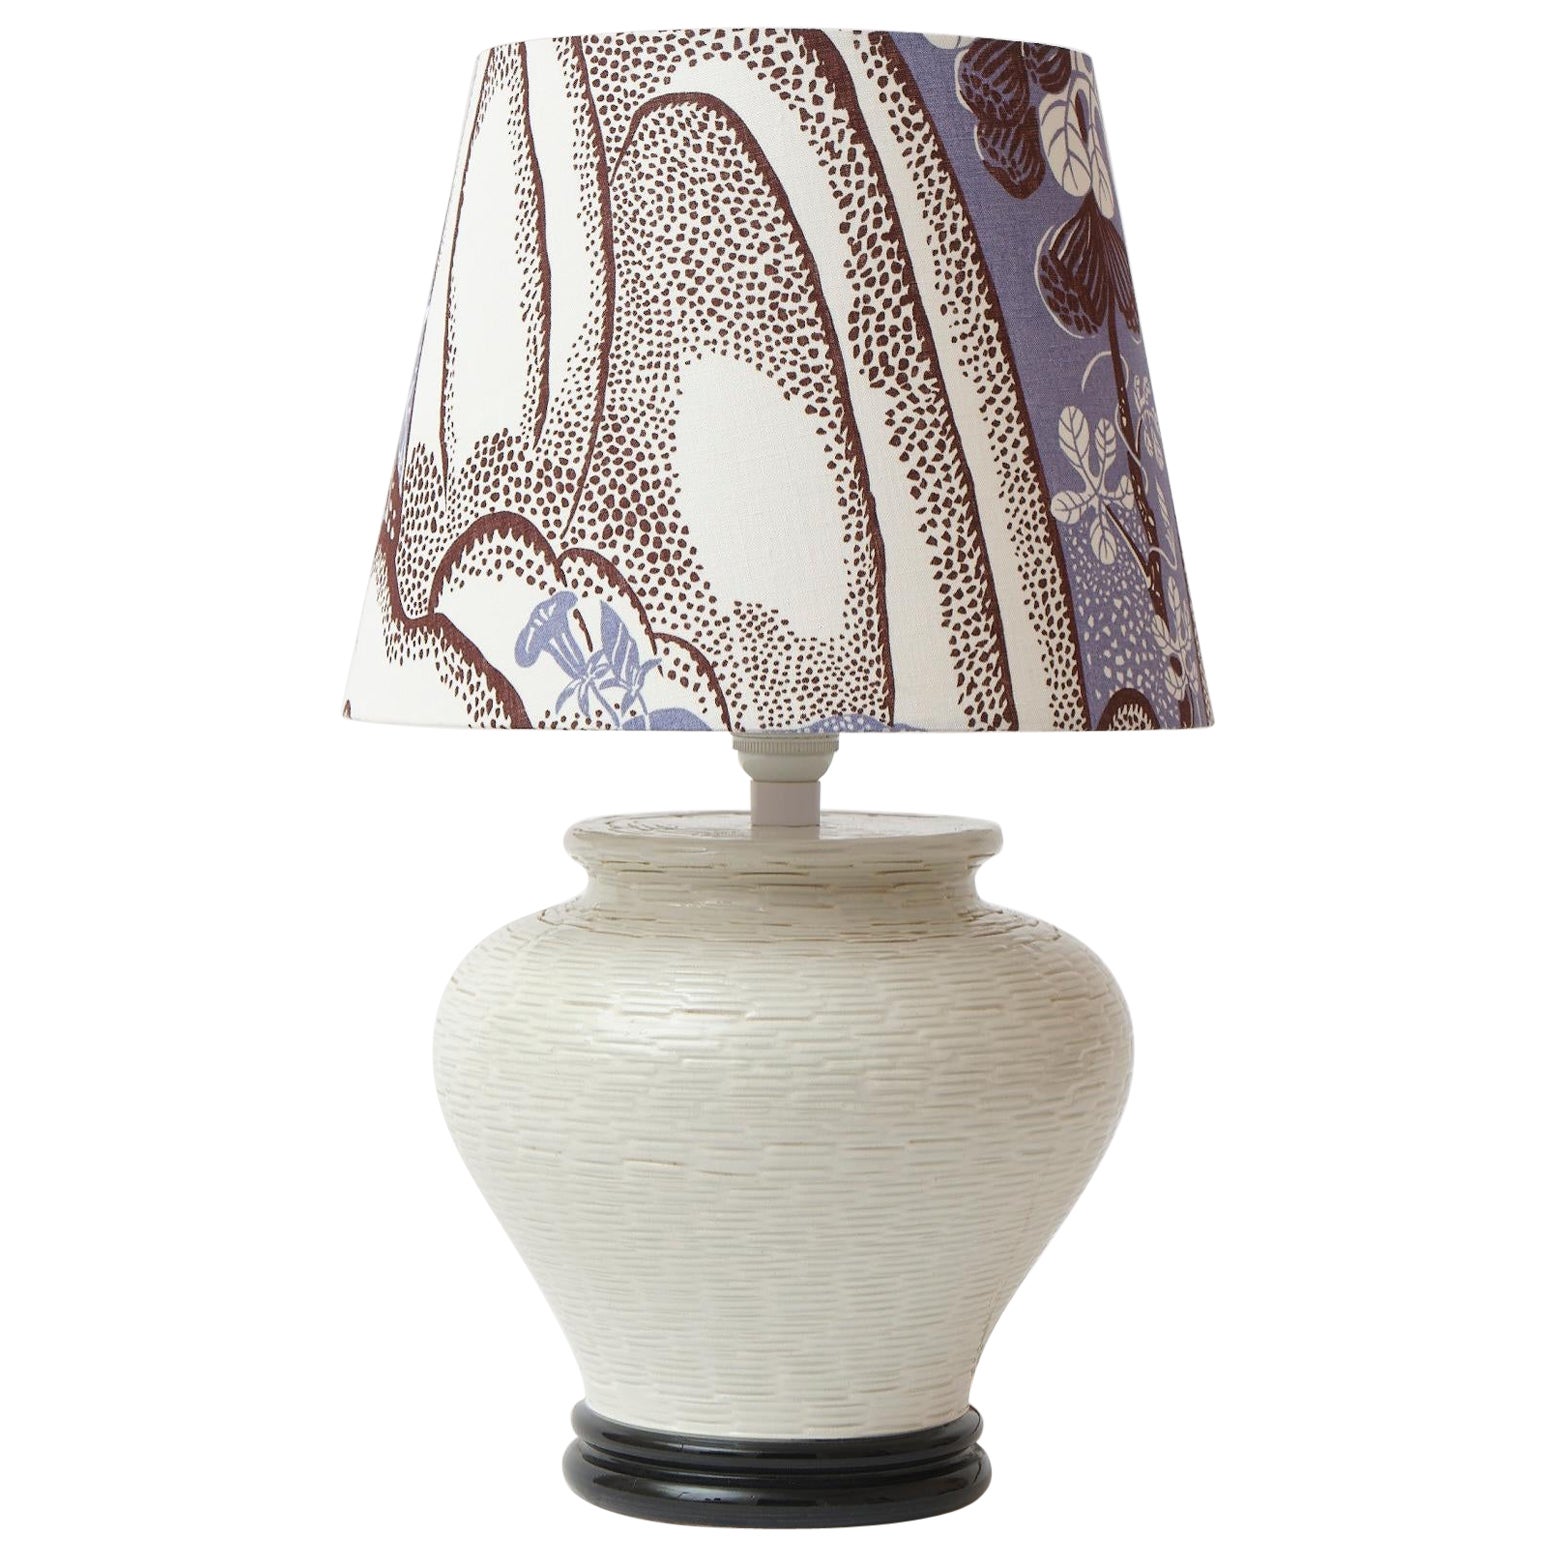 Vintage handmade Italian ceramic table lamp shade in vintage Josef Frank textile